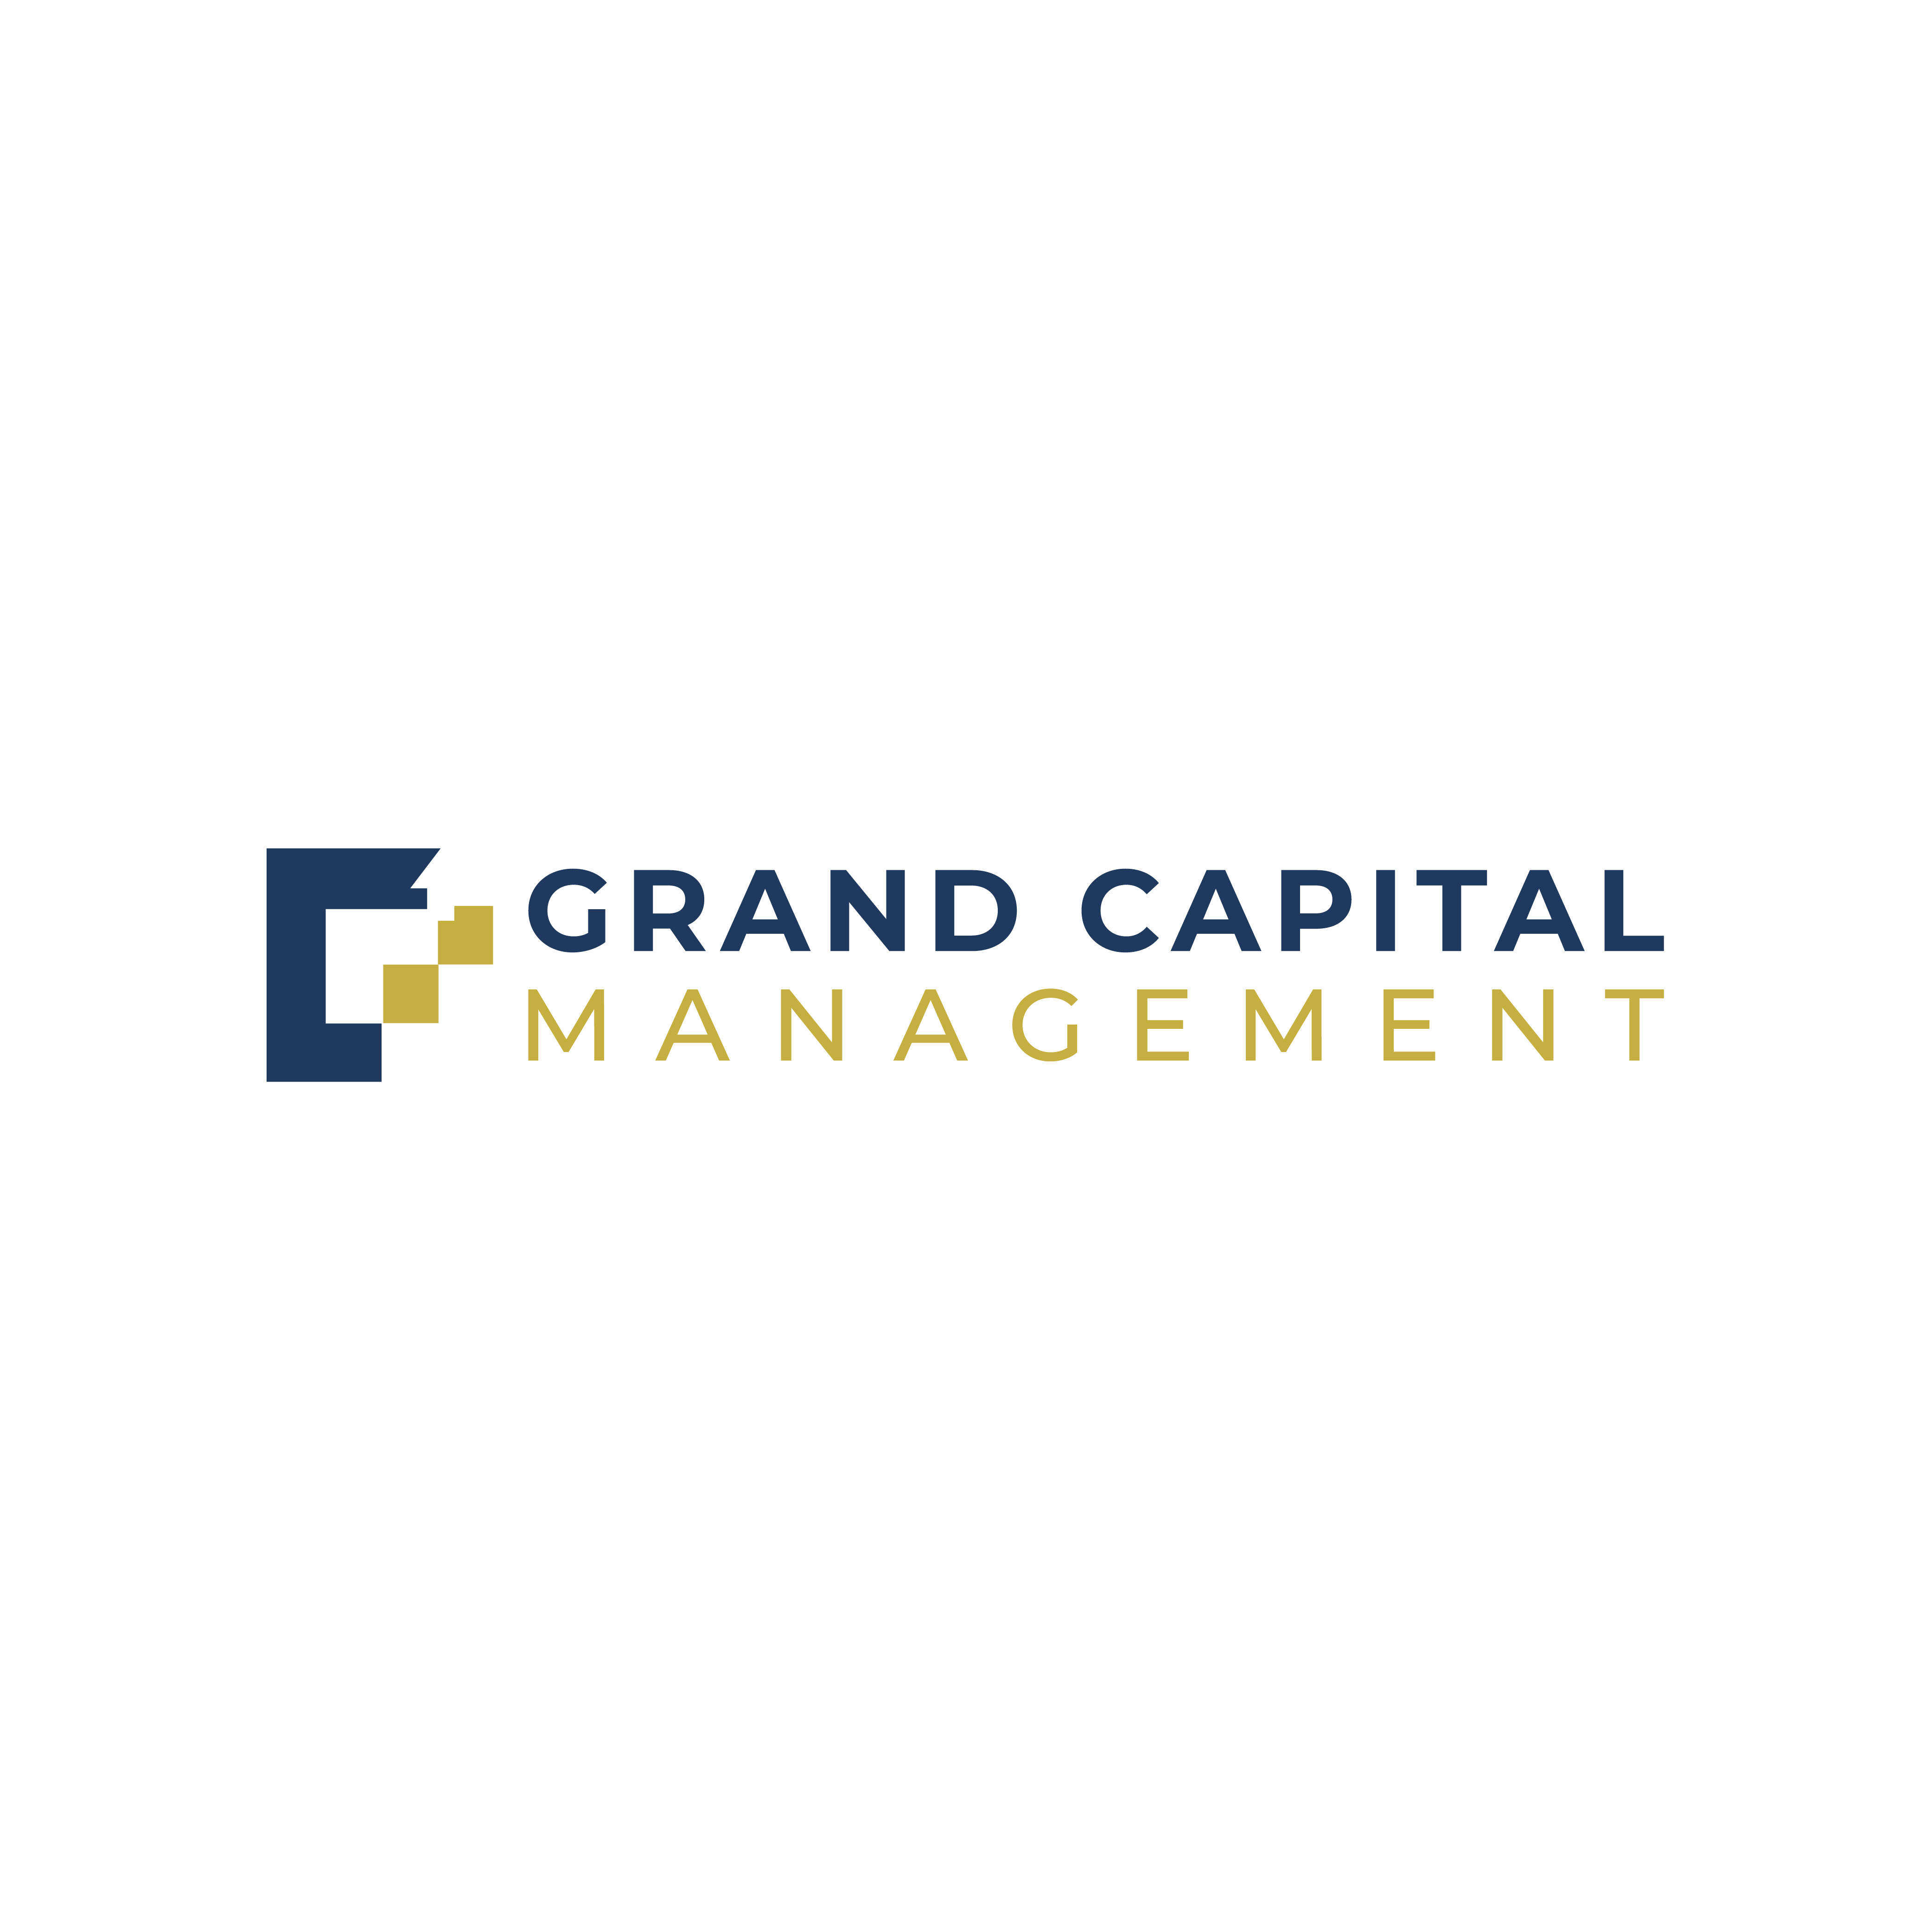 Grand Capital Management